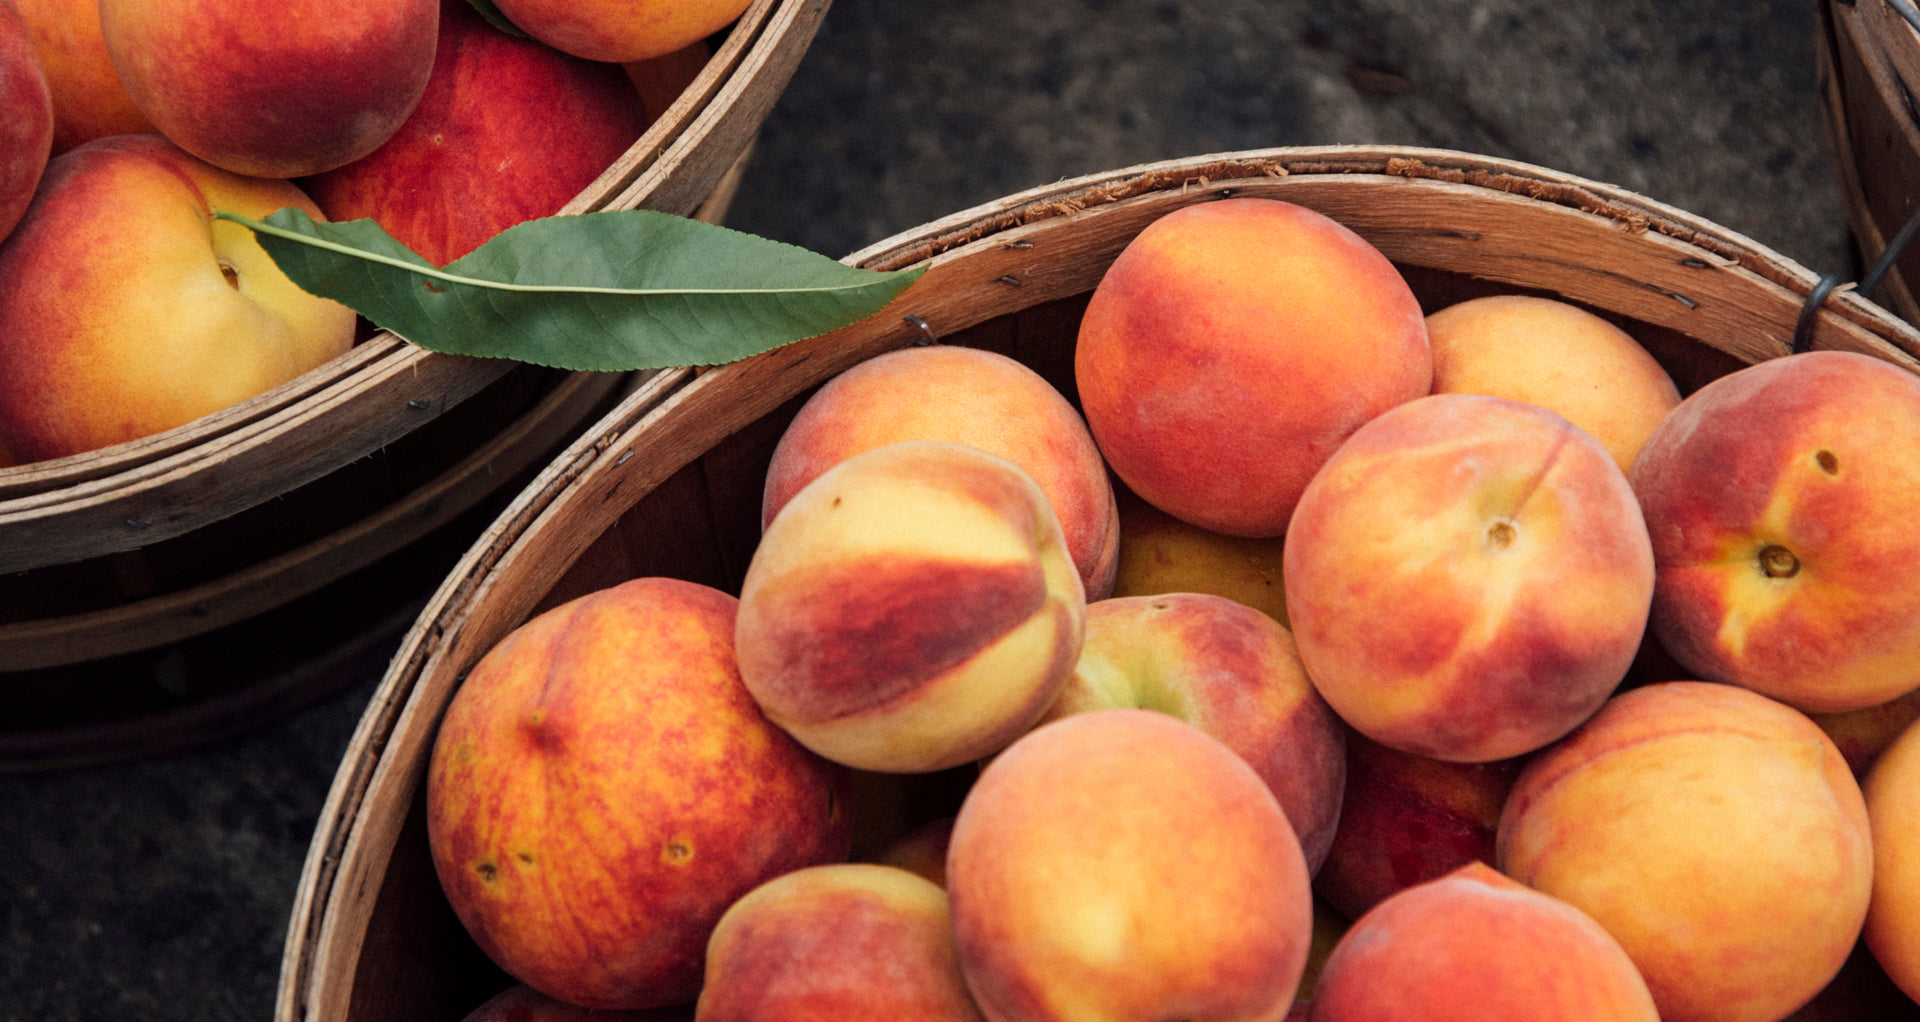 Bushel of ripe peaches